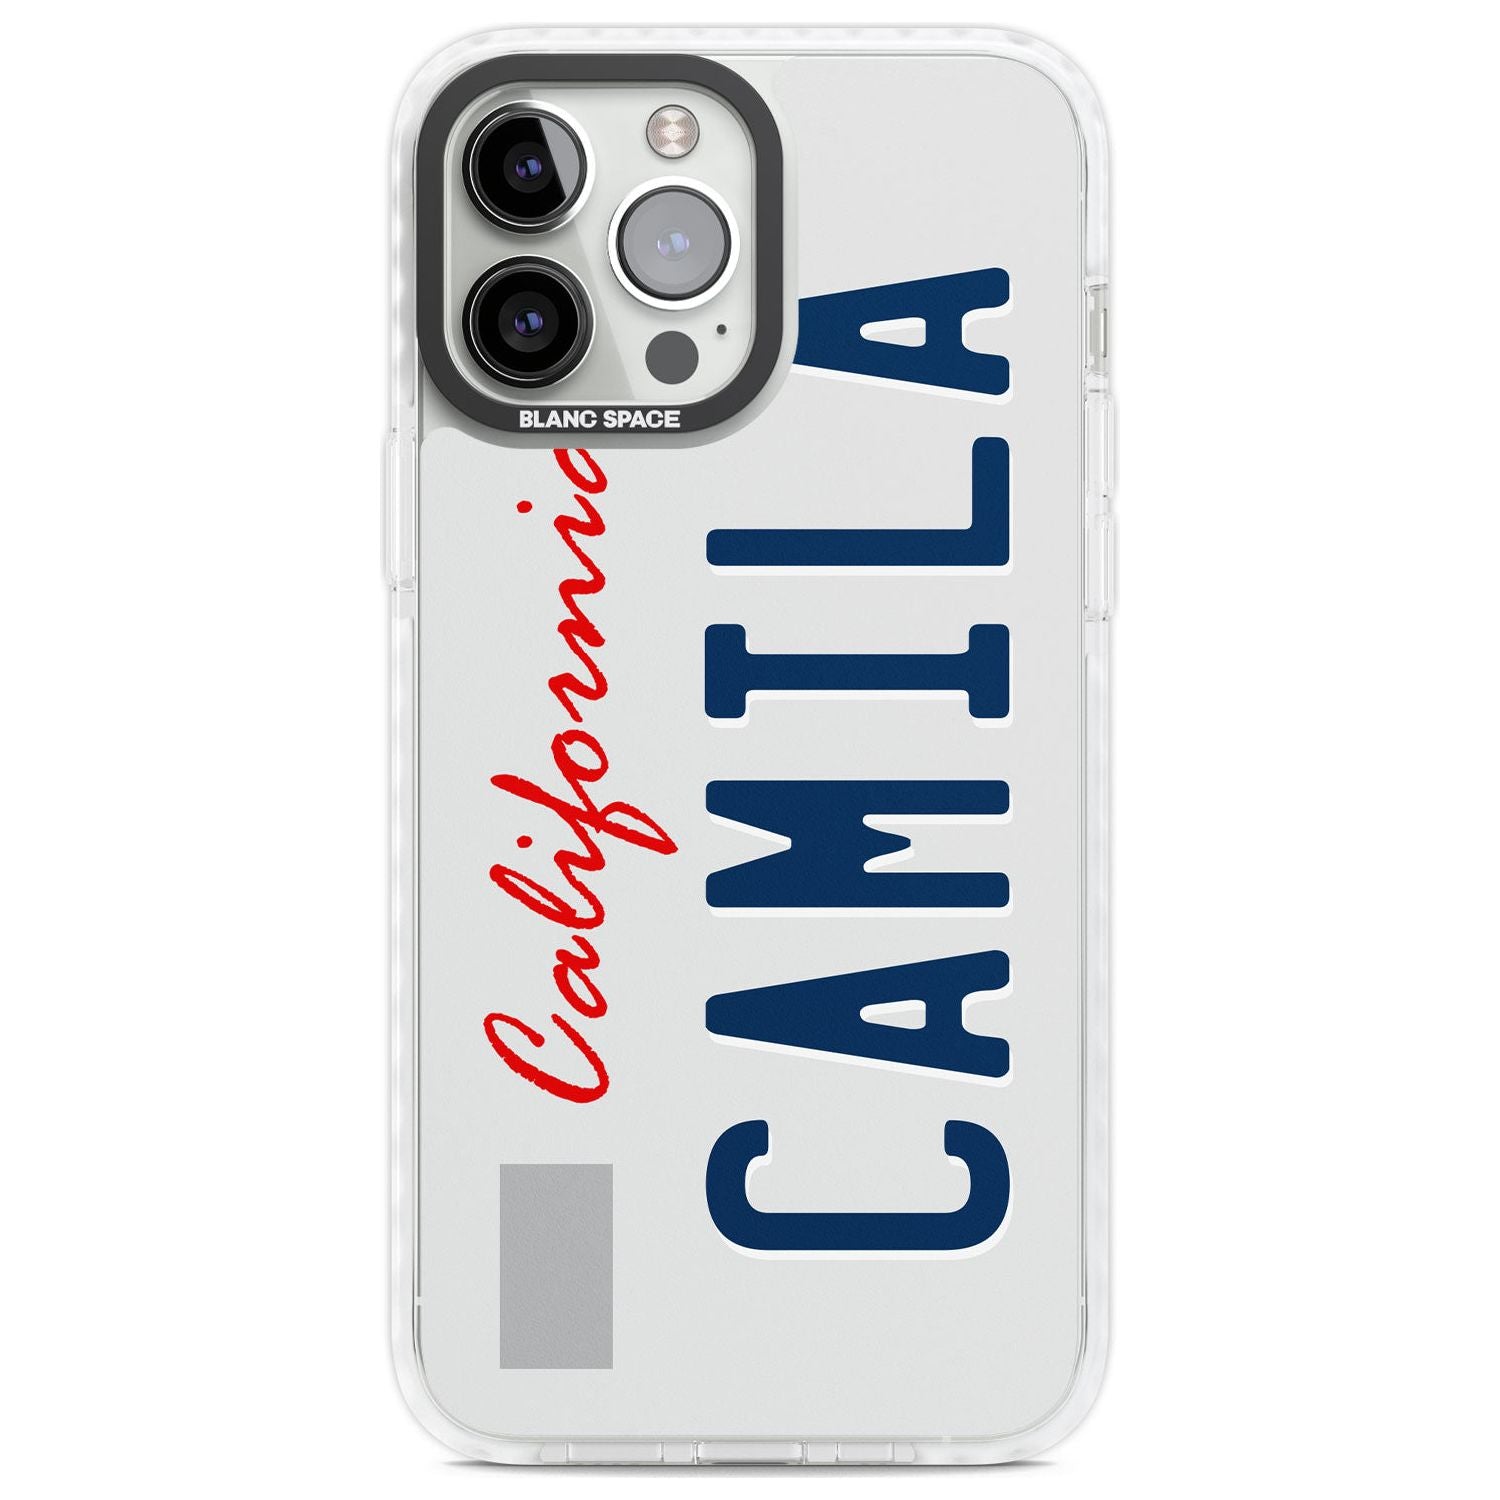 California License Plate Custom Phone Case iPhone 13 Pro Max / Impact Case,iPhone 14 Pro Max / Impact Case Blanc Space